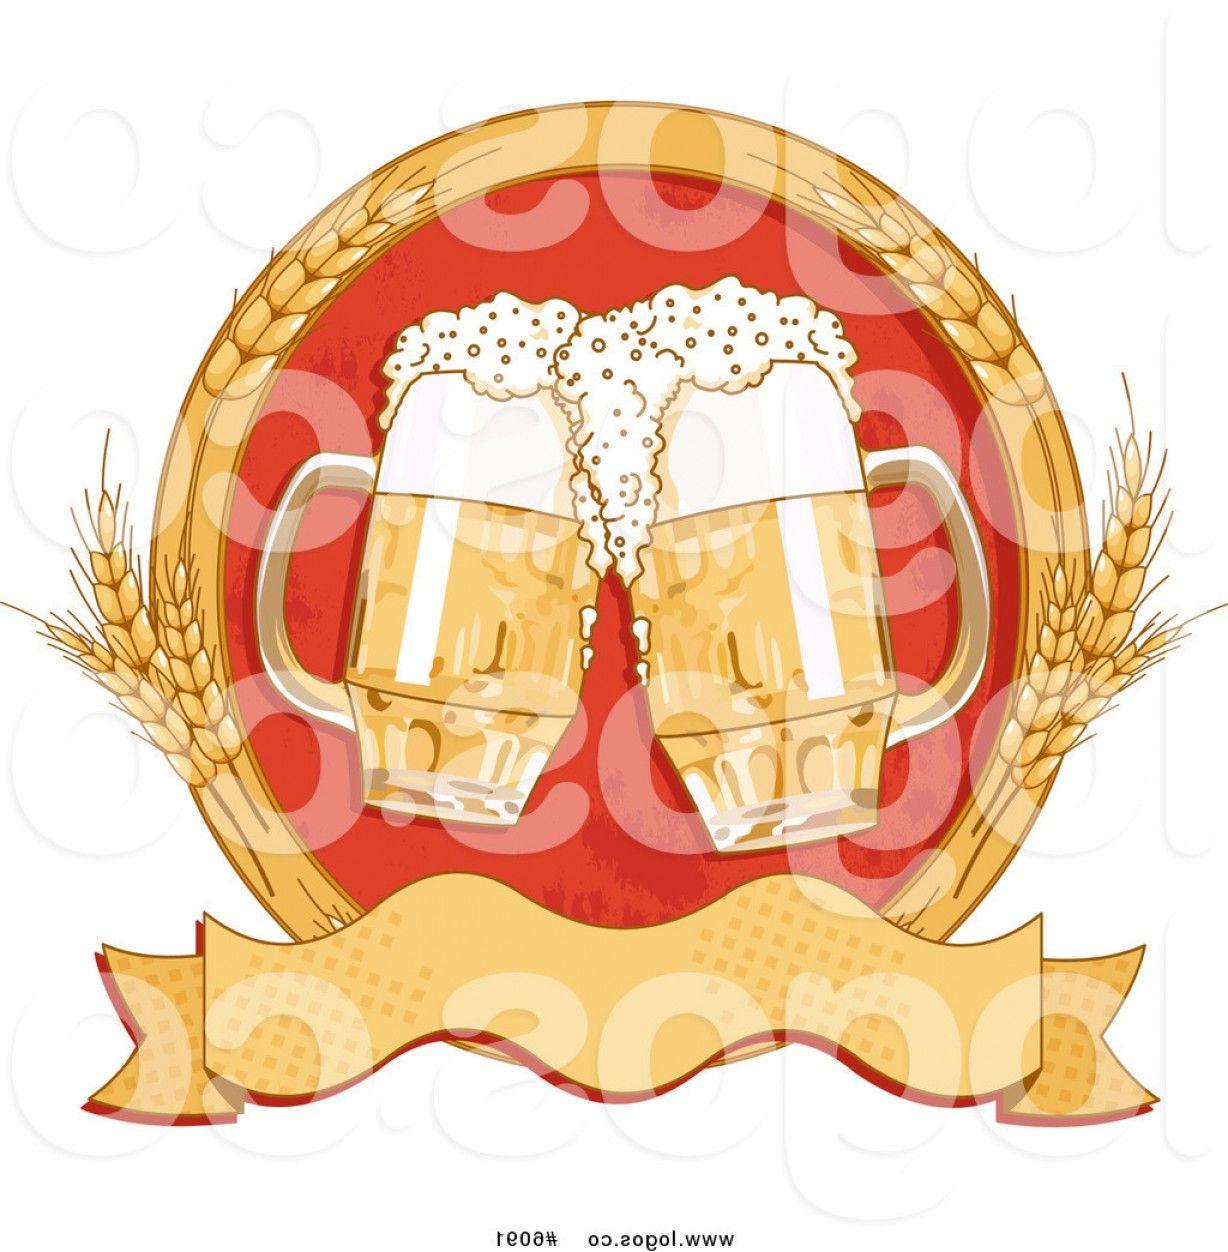 Wheat Circle Logo - Royalty Free Vector Of A Logo Of A Wheat Circle Around Two Beer Mugs